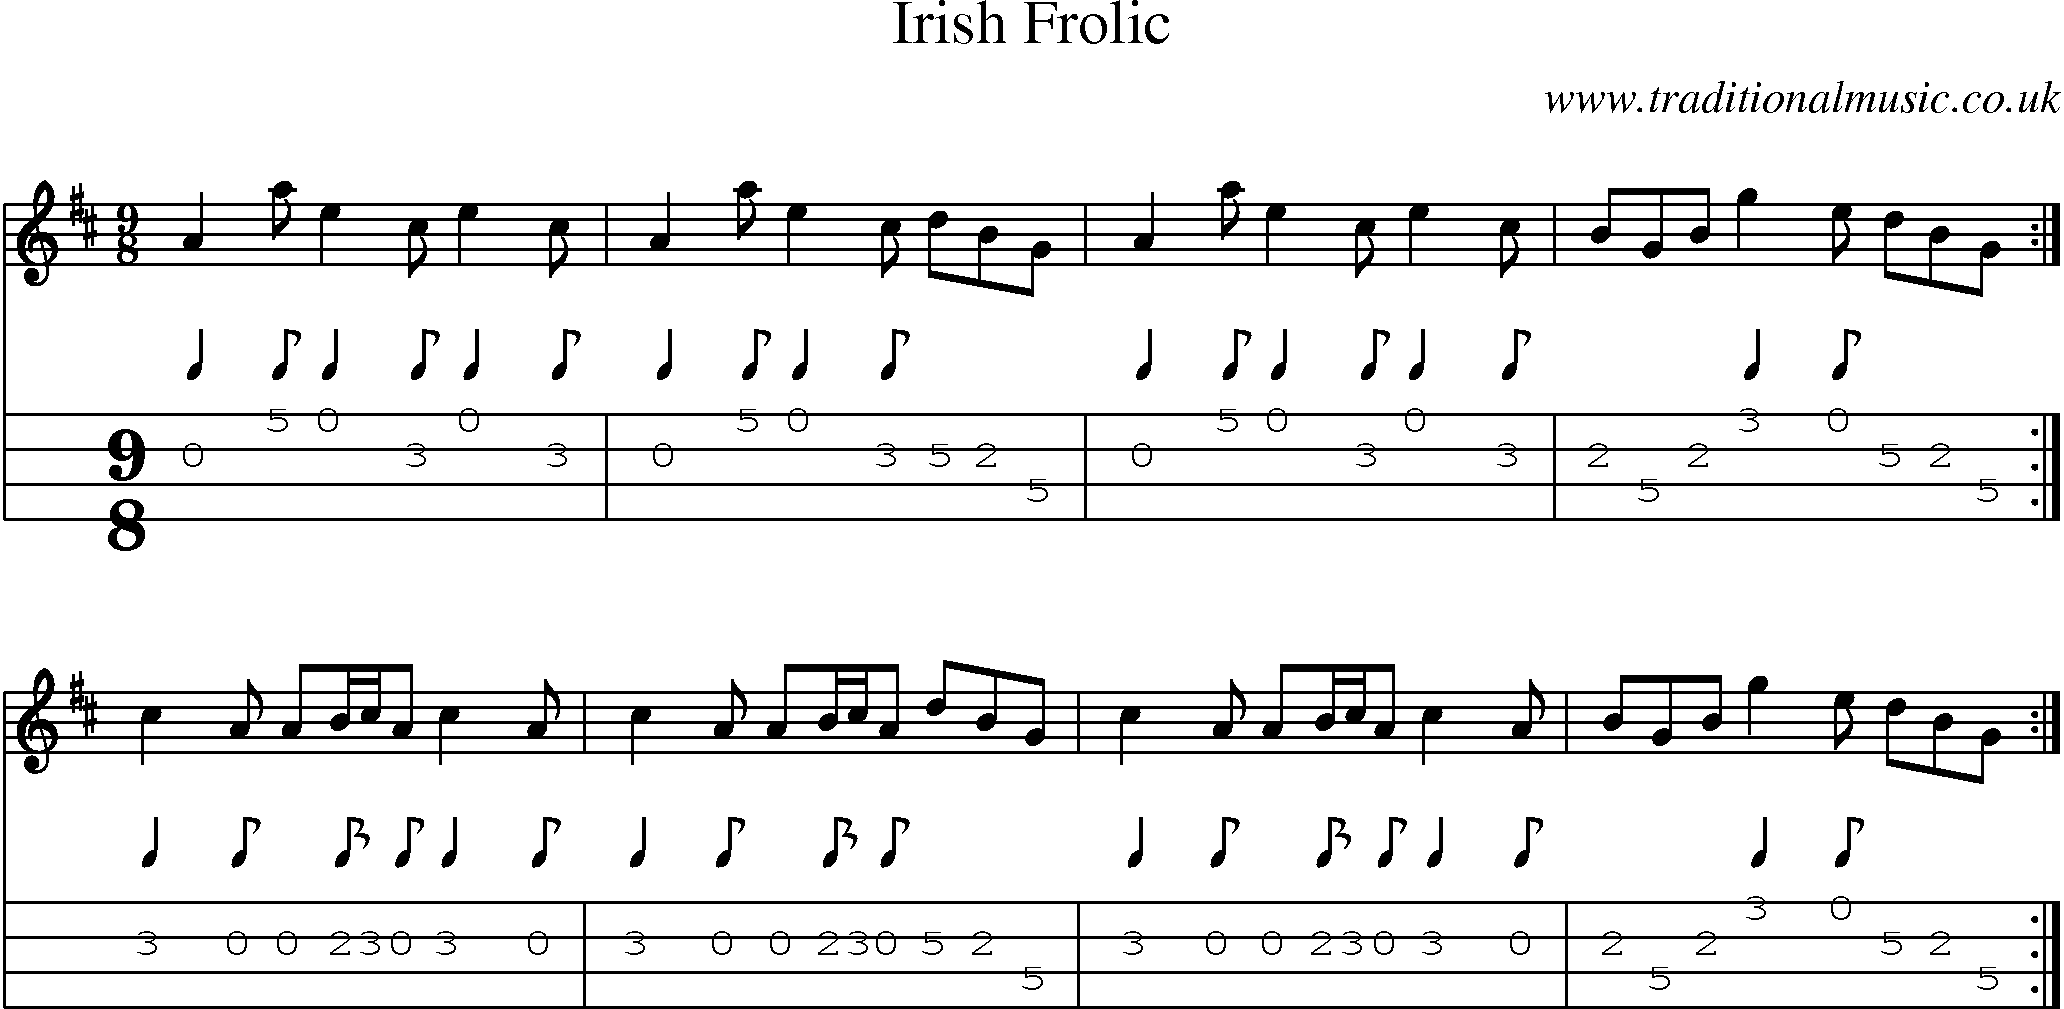 Music Score and Mandolin Tabs for Irish Frolic